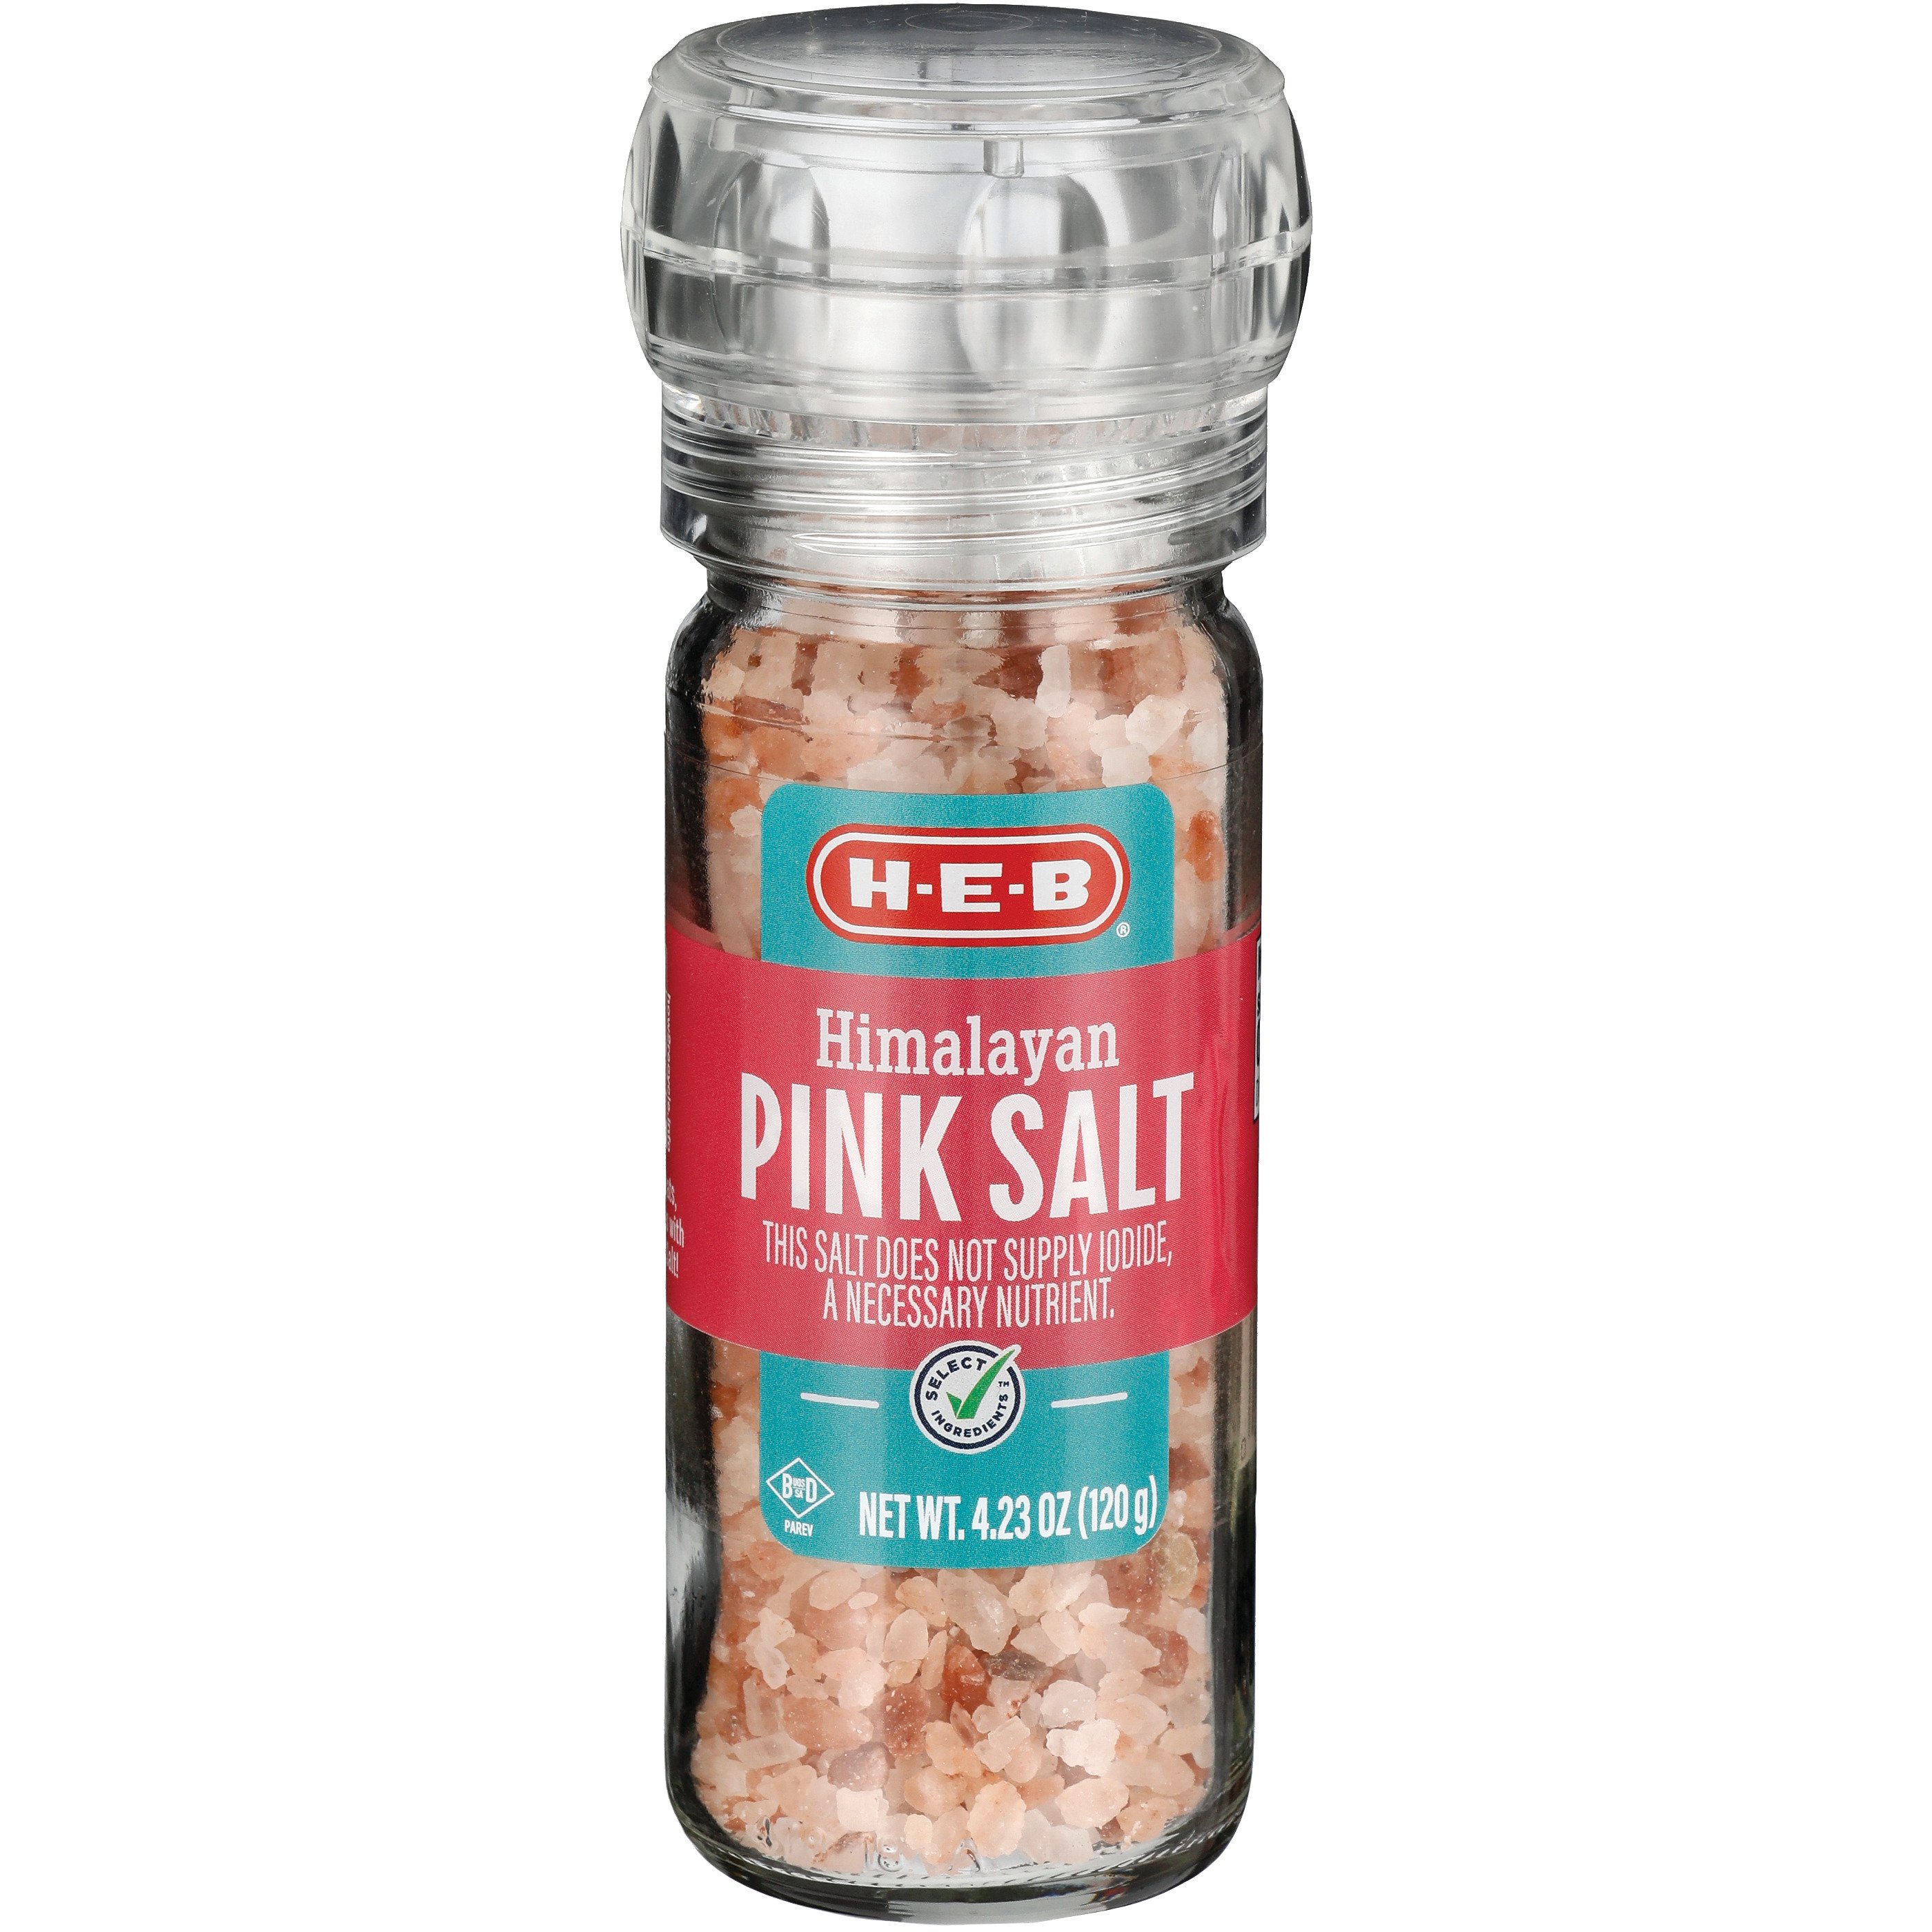 H-E-B Himalayan Pink Salt Grinder - Shop Herbs & Spices at H-E-B